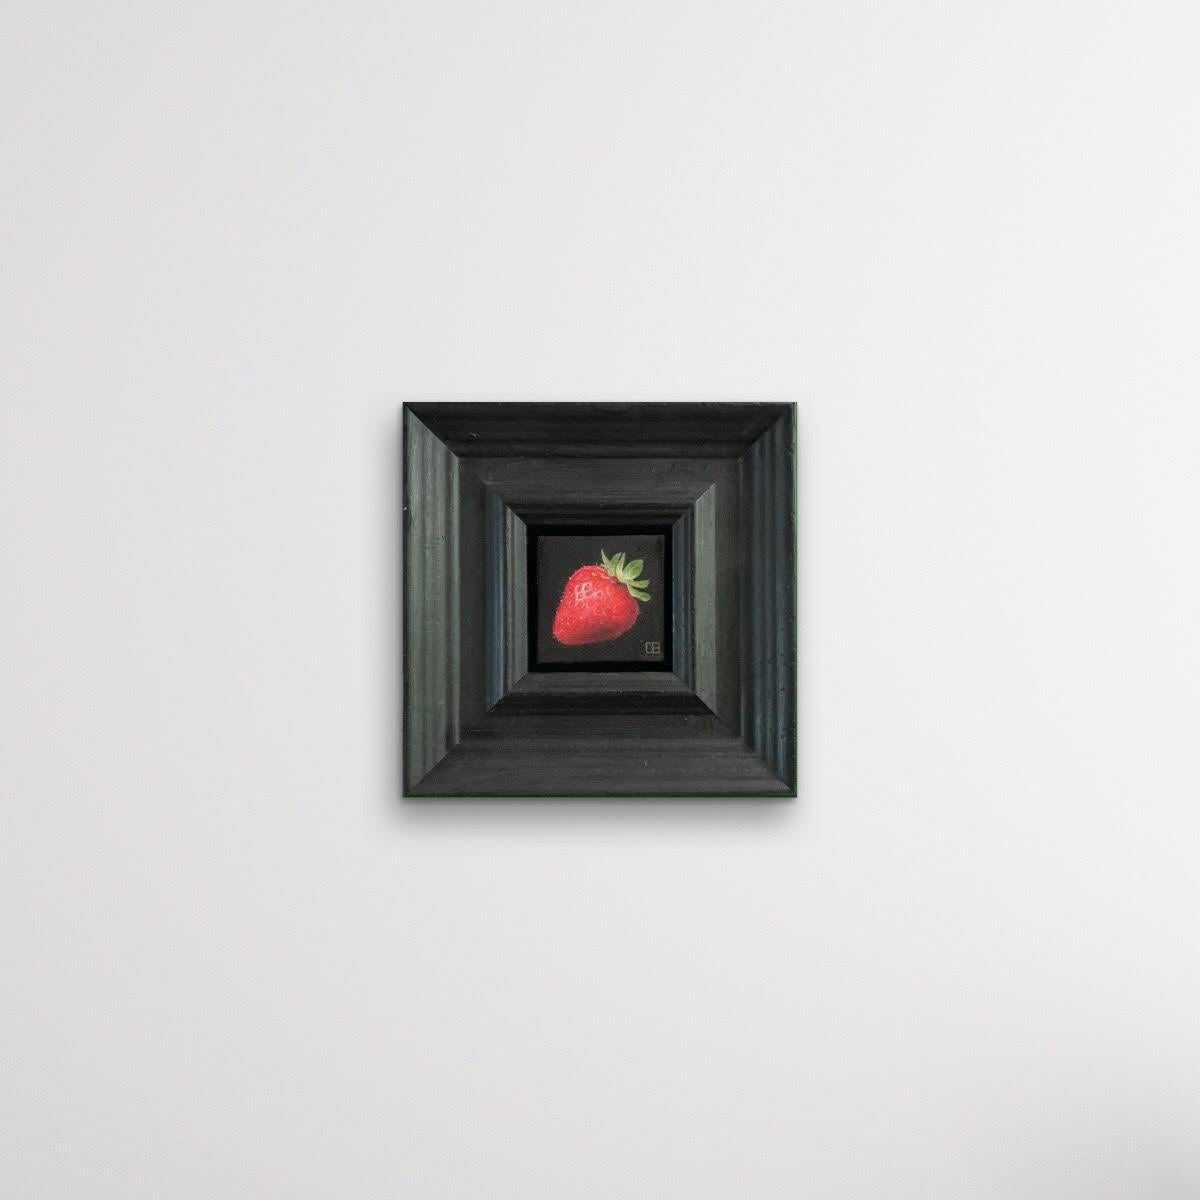 Peinture de nature morte contemporaine « Pocket Strawberry » de Dani Humberstone - Contemporain Painting par Dani Humberstone 